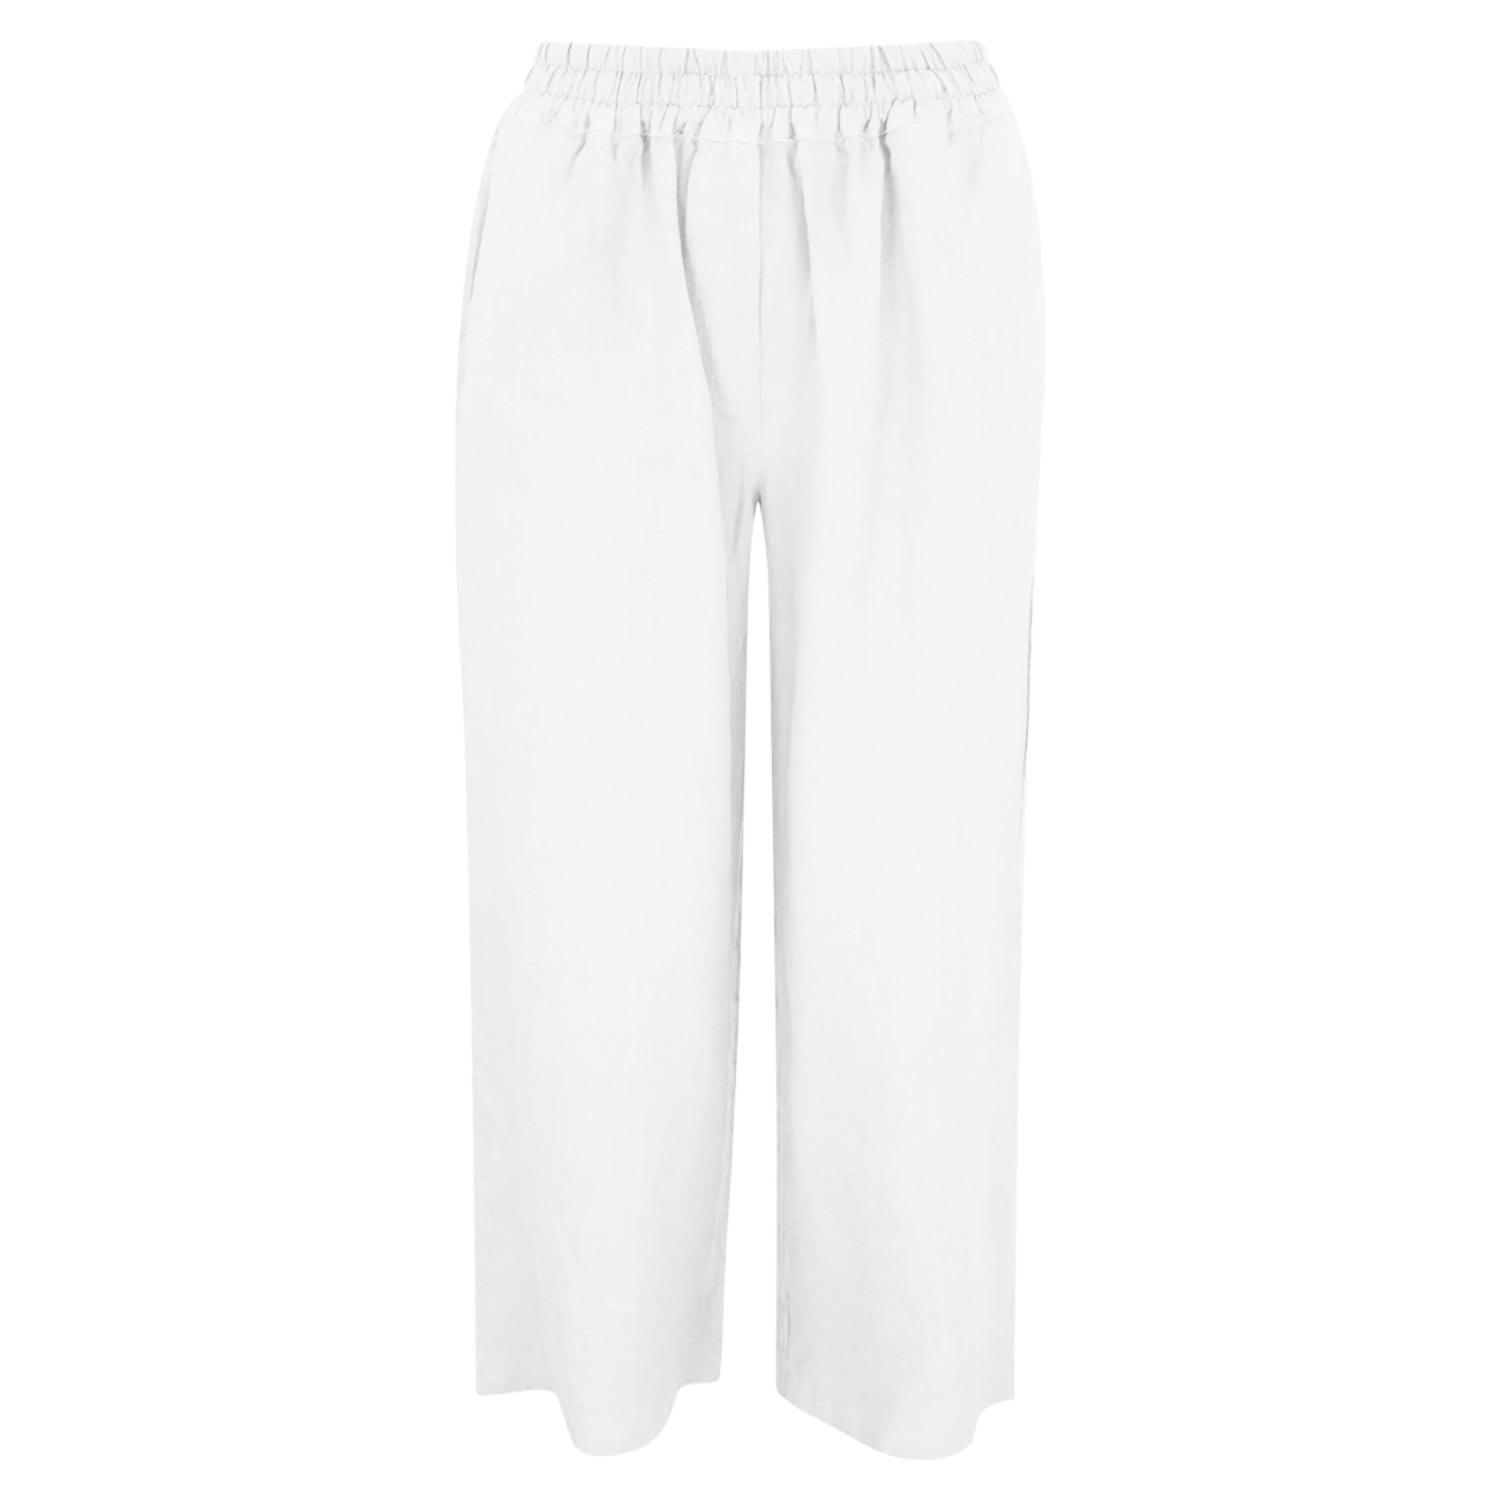 Haris Cotton Women's Cropped Linen Pants - White